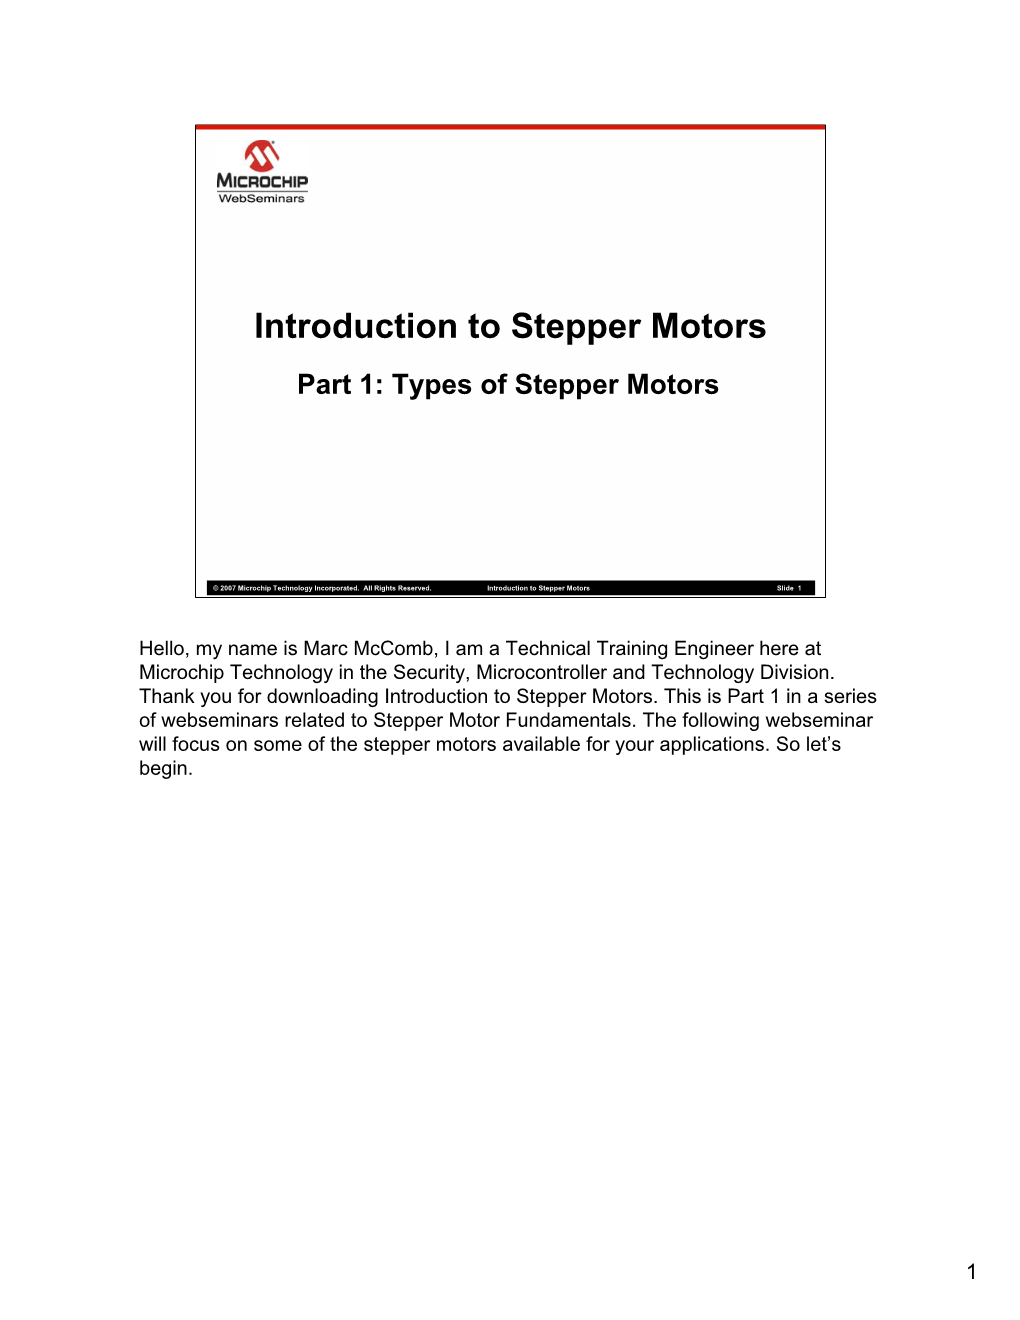 Introduction to Stepper Motors Part 1: Types of Stepper Motors